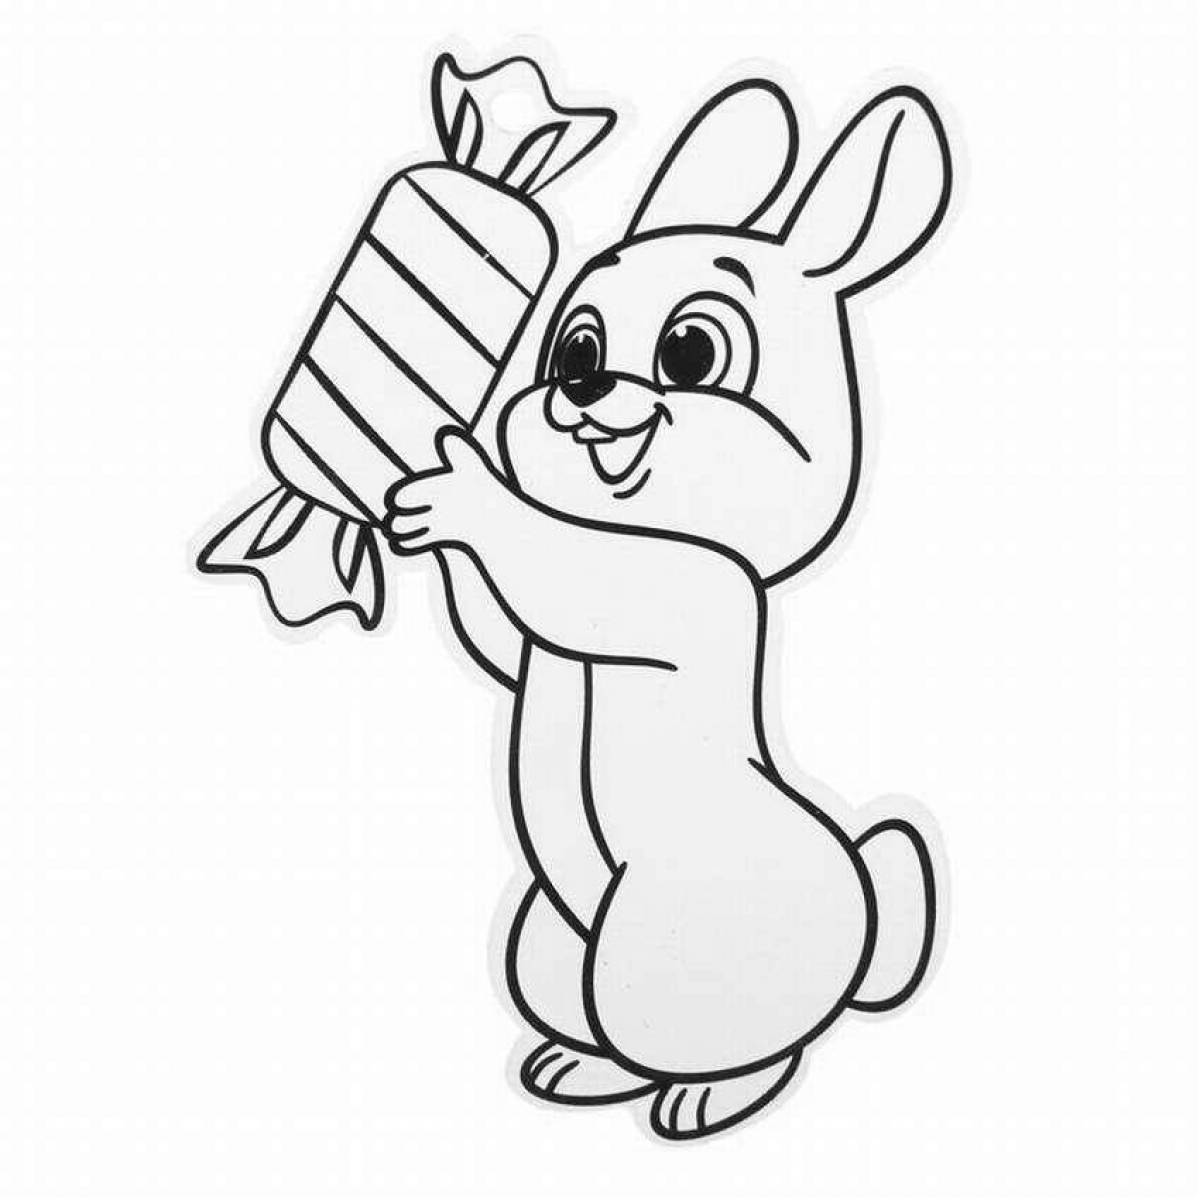 Animated Christmas Bunny coloring book